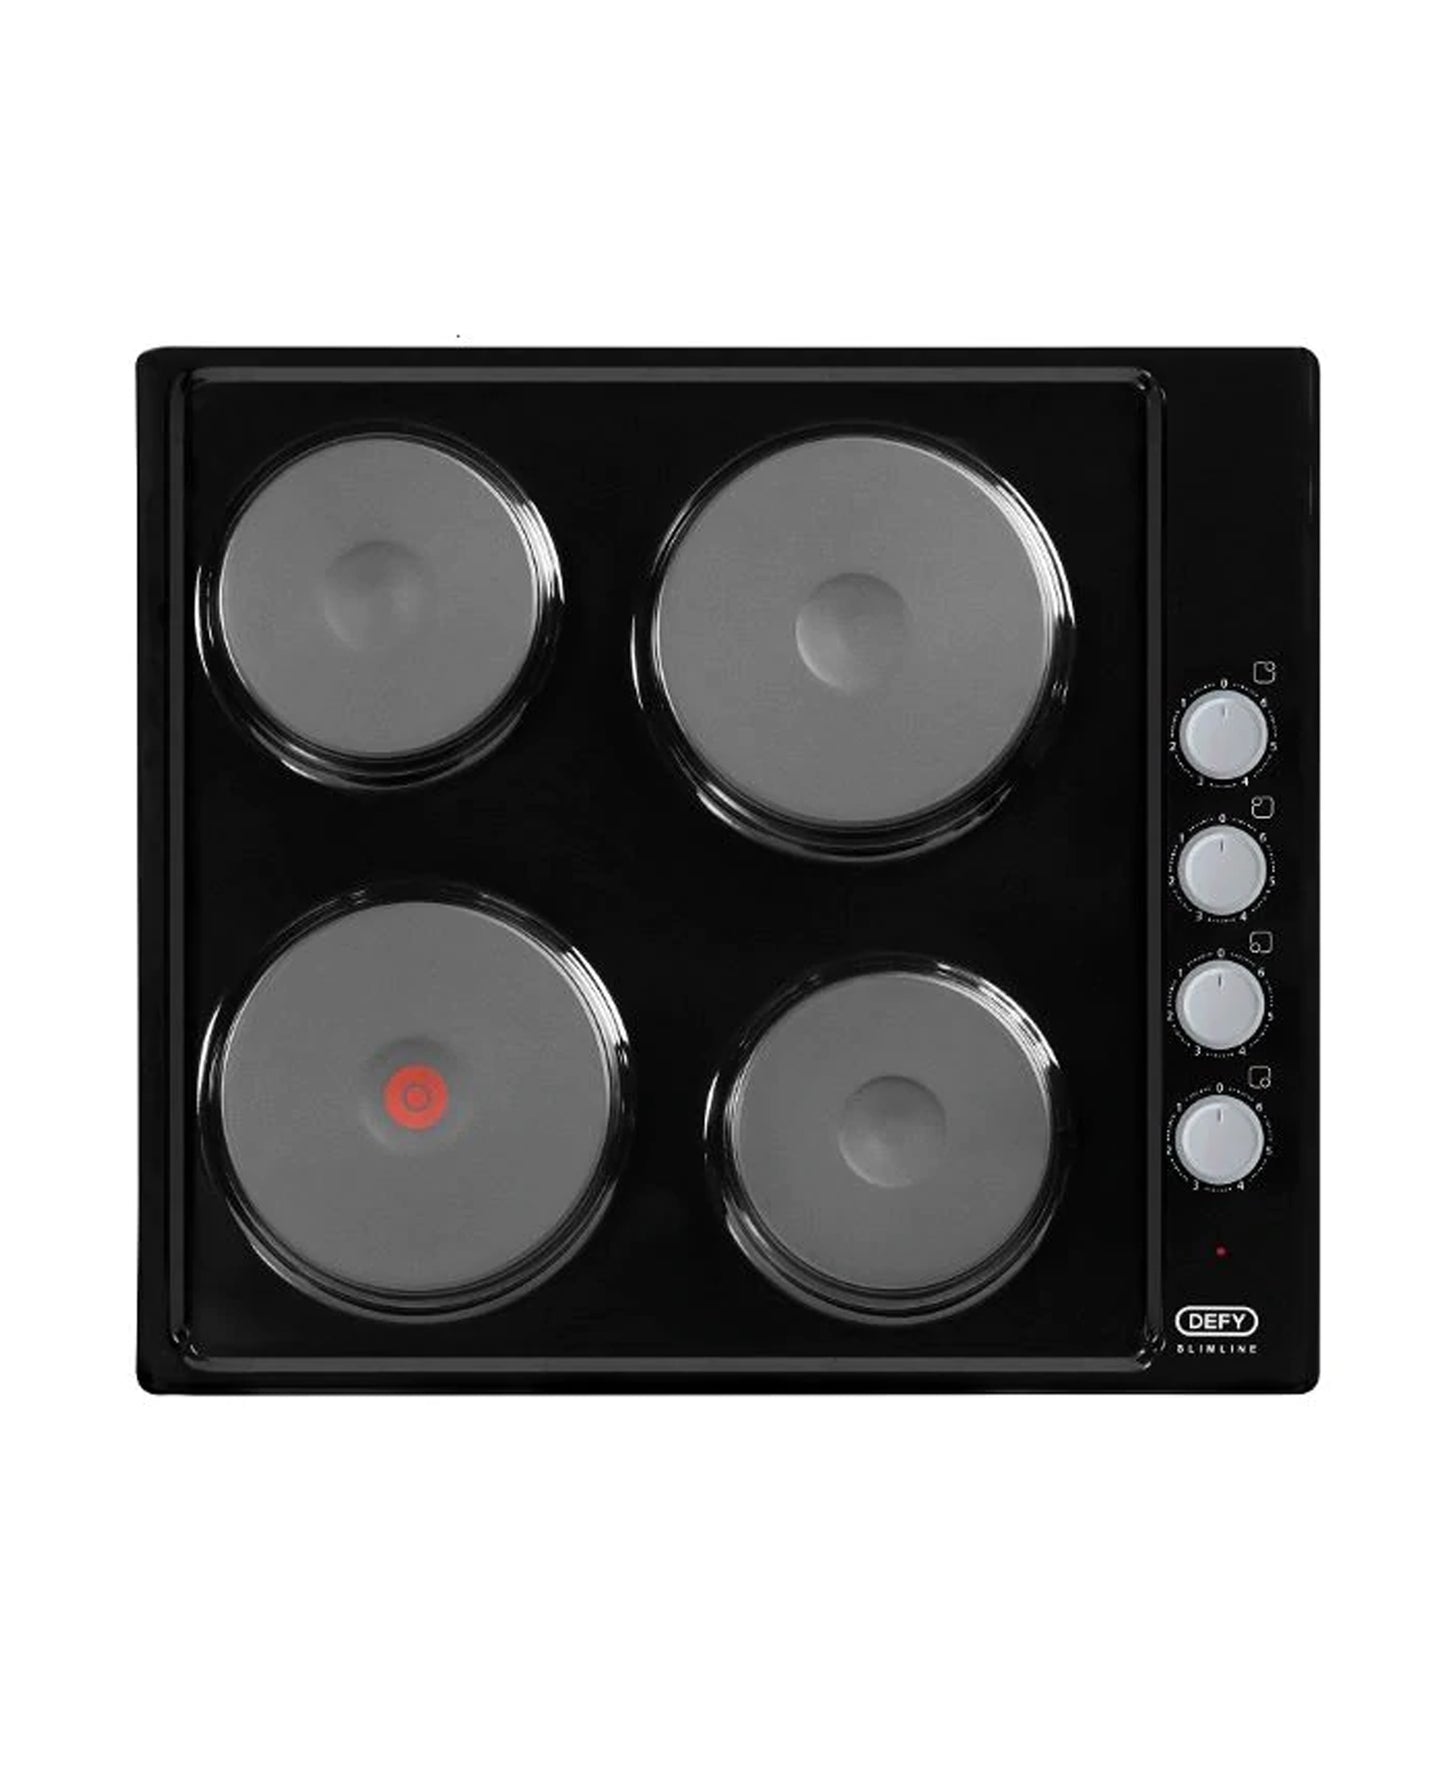 Defy Solid 4 Plate Slimline Control Panel Hob - Black